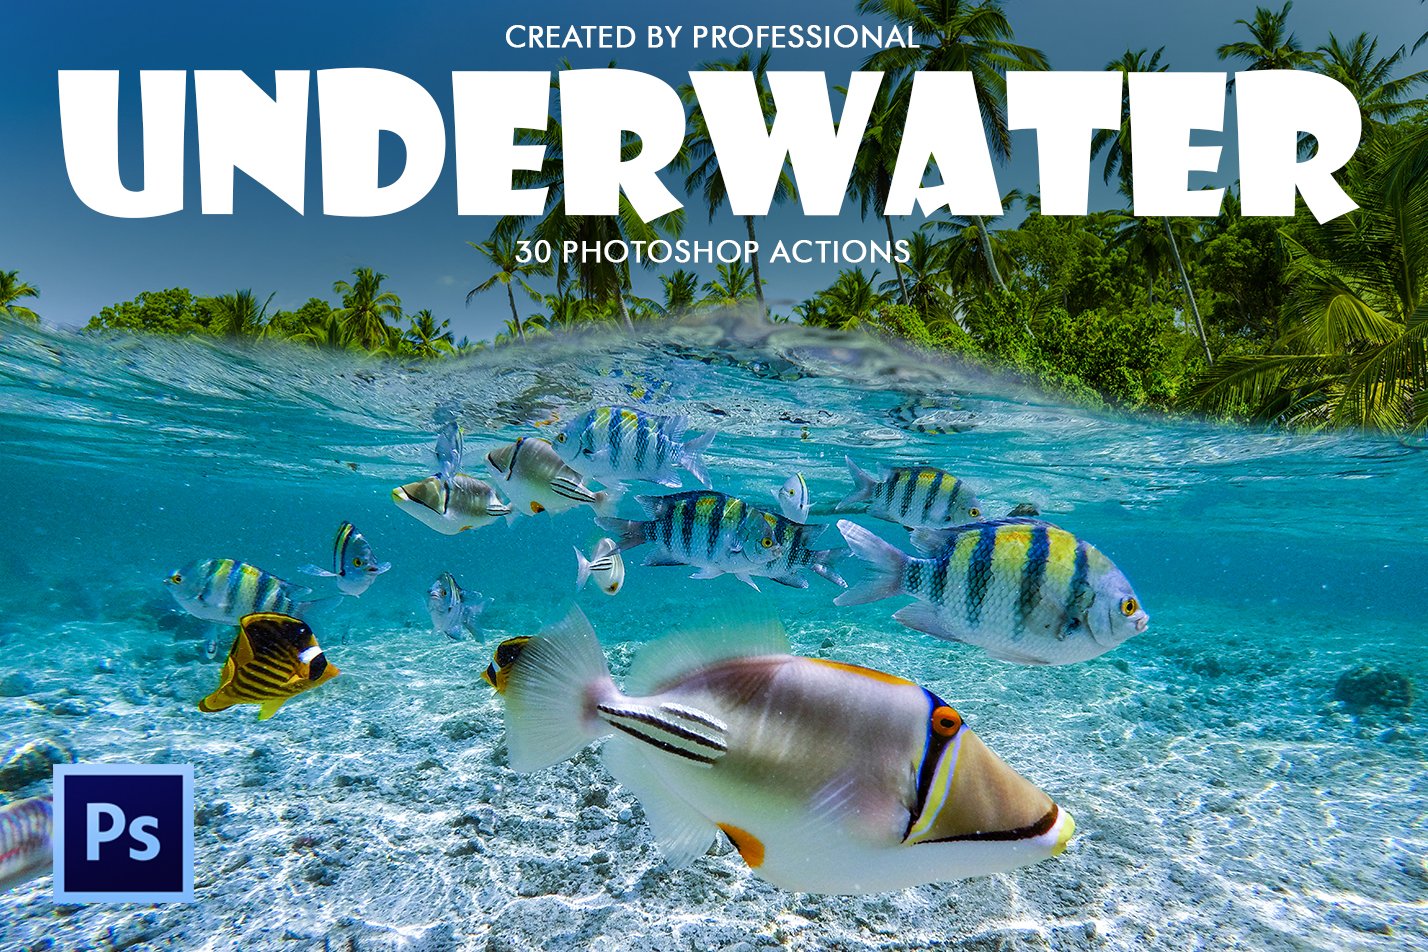 Underwater Photoshop Actionscover image.